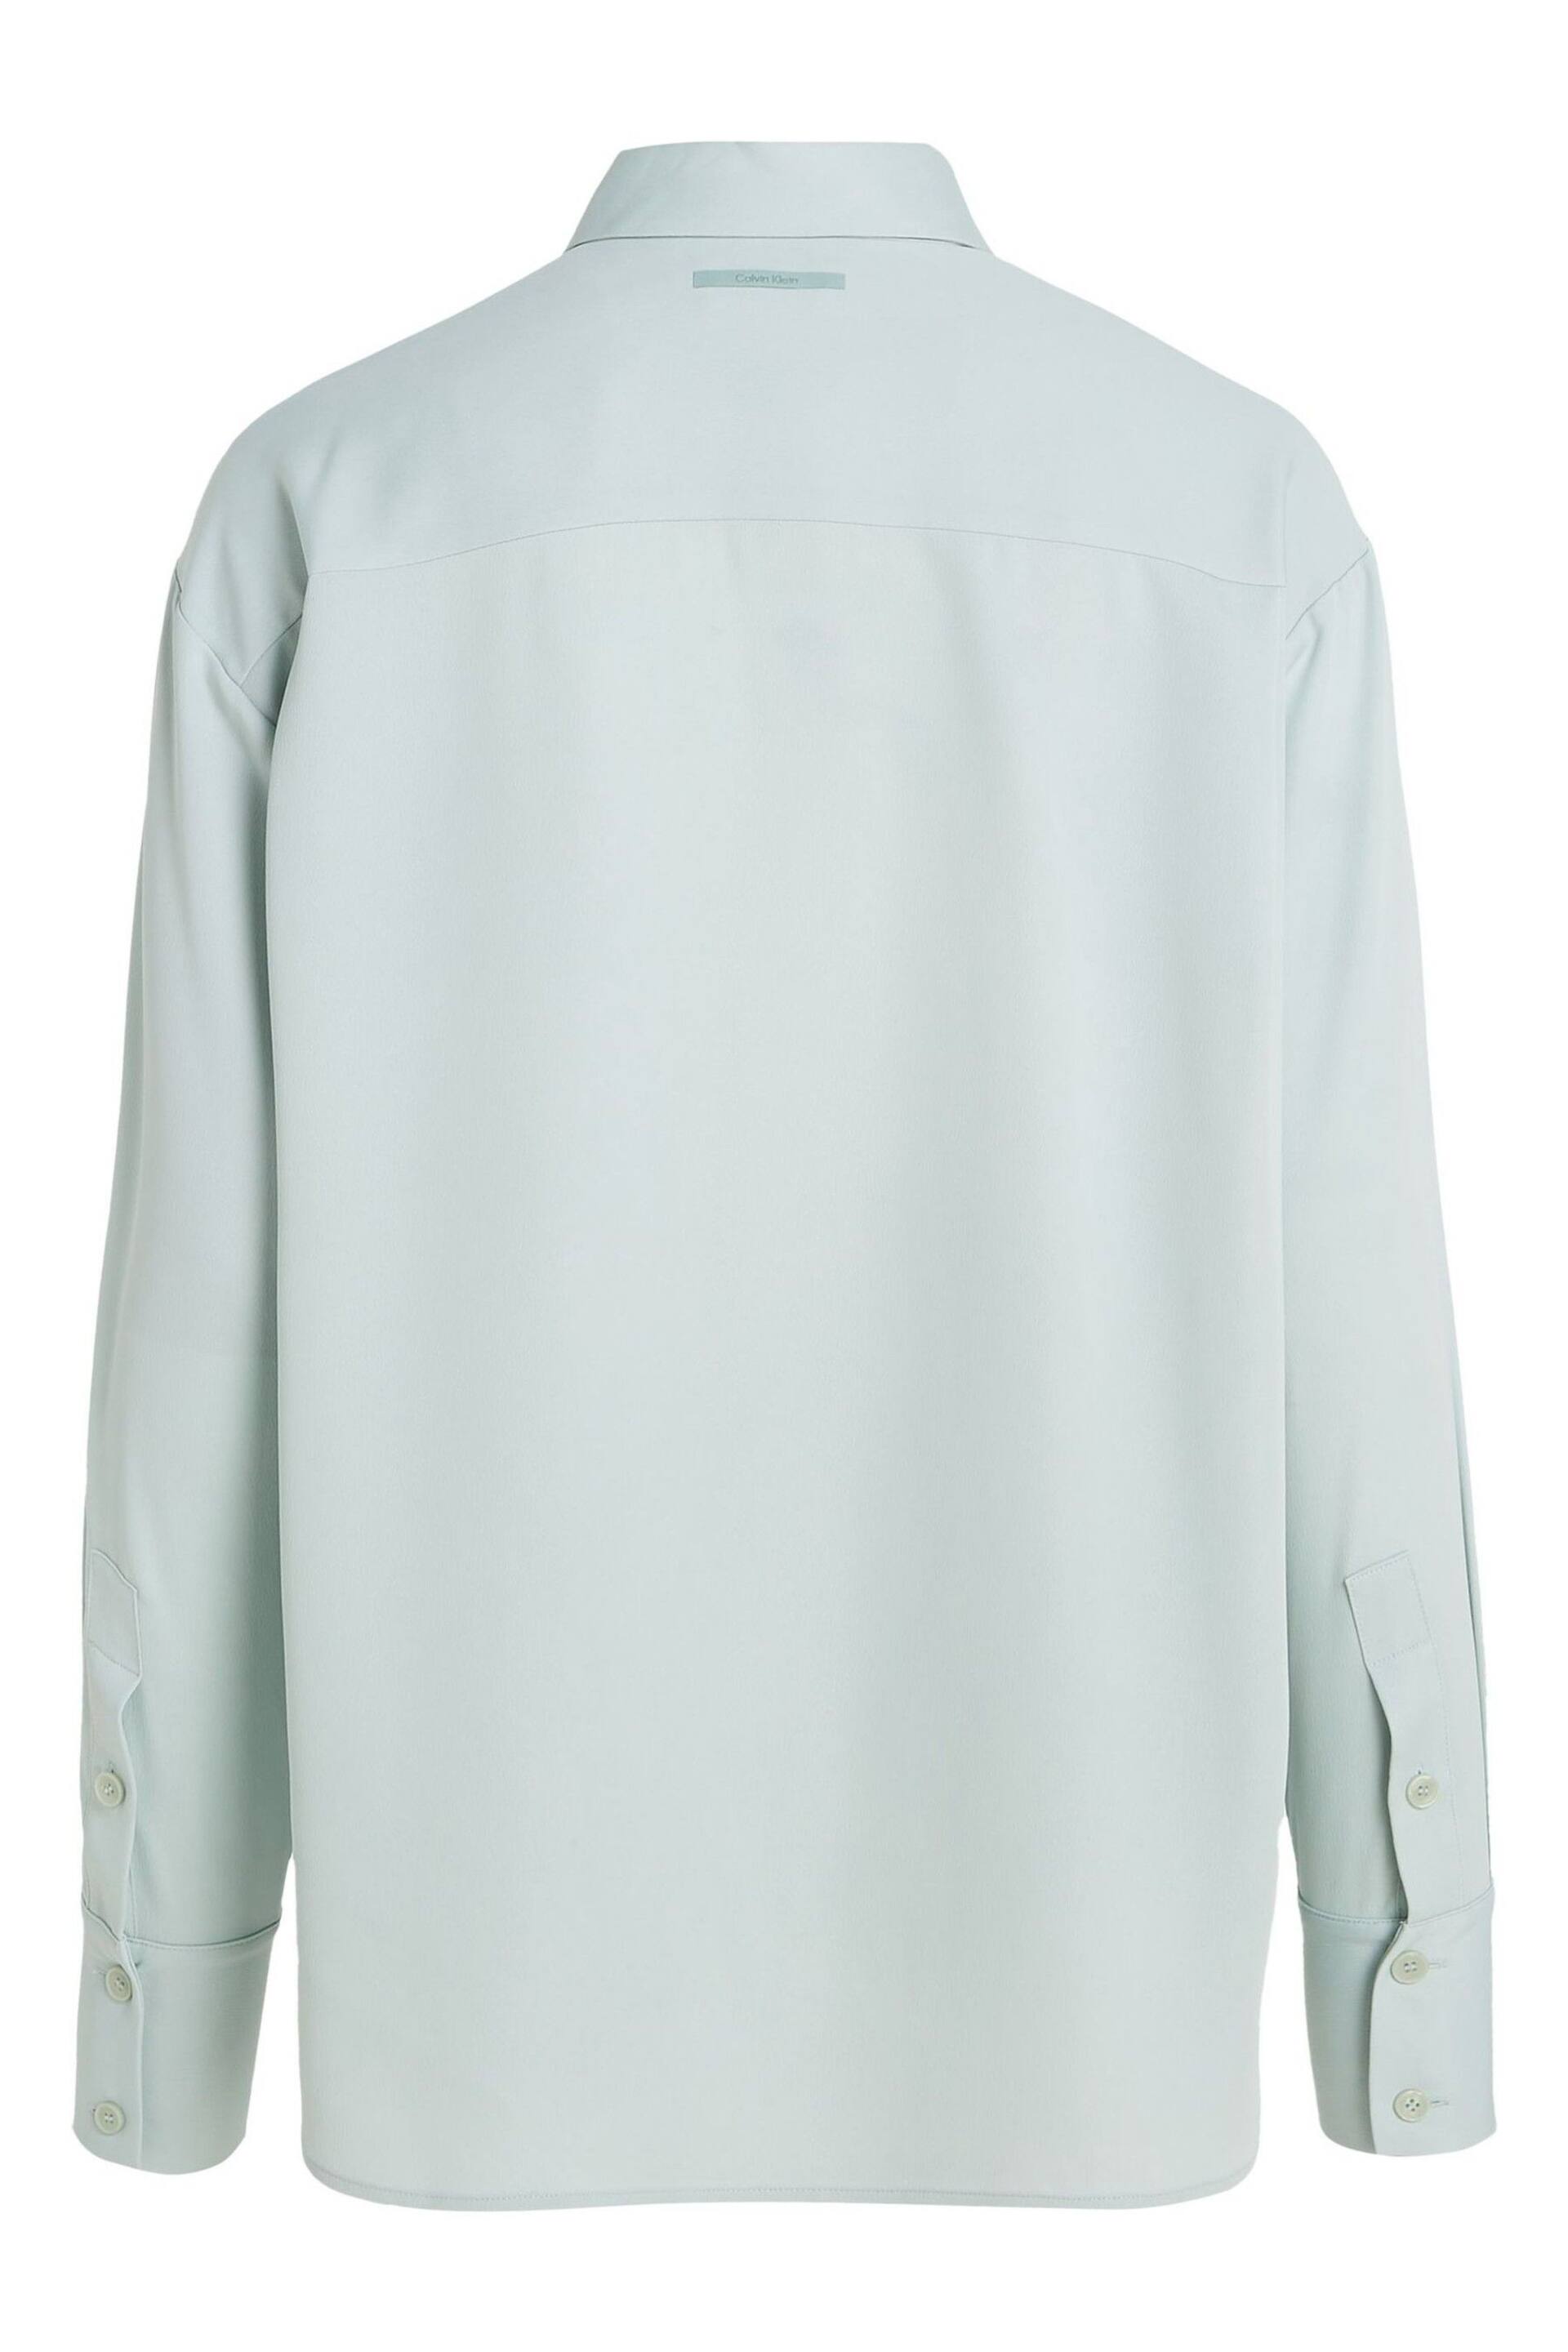 Calvin Klein Grey Relaxed Shirt - Image 5 of 6